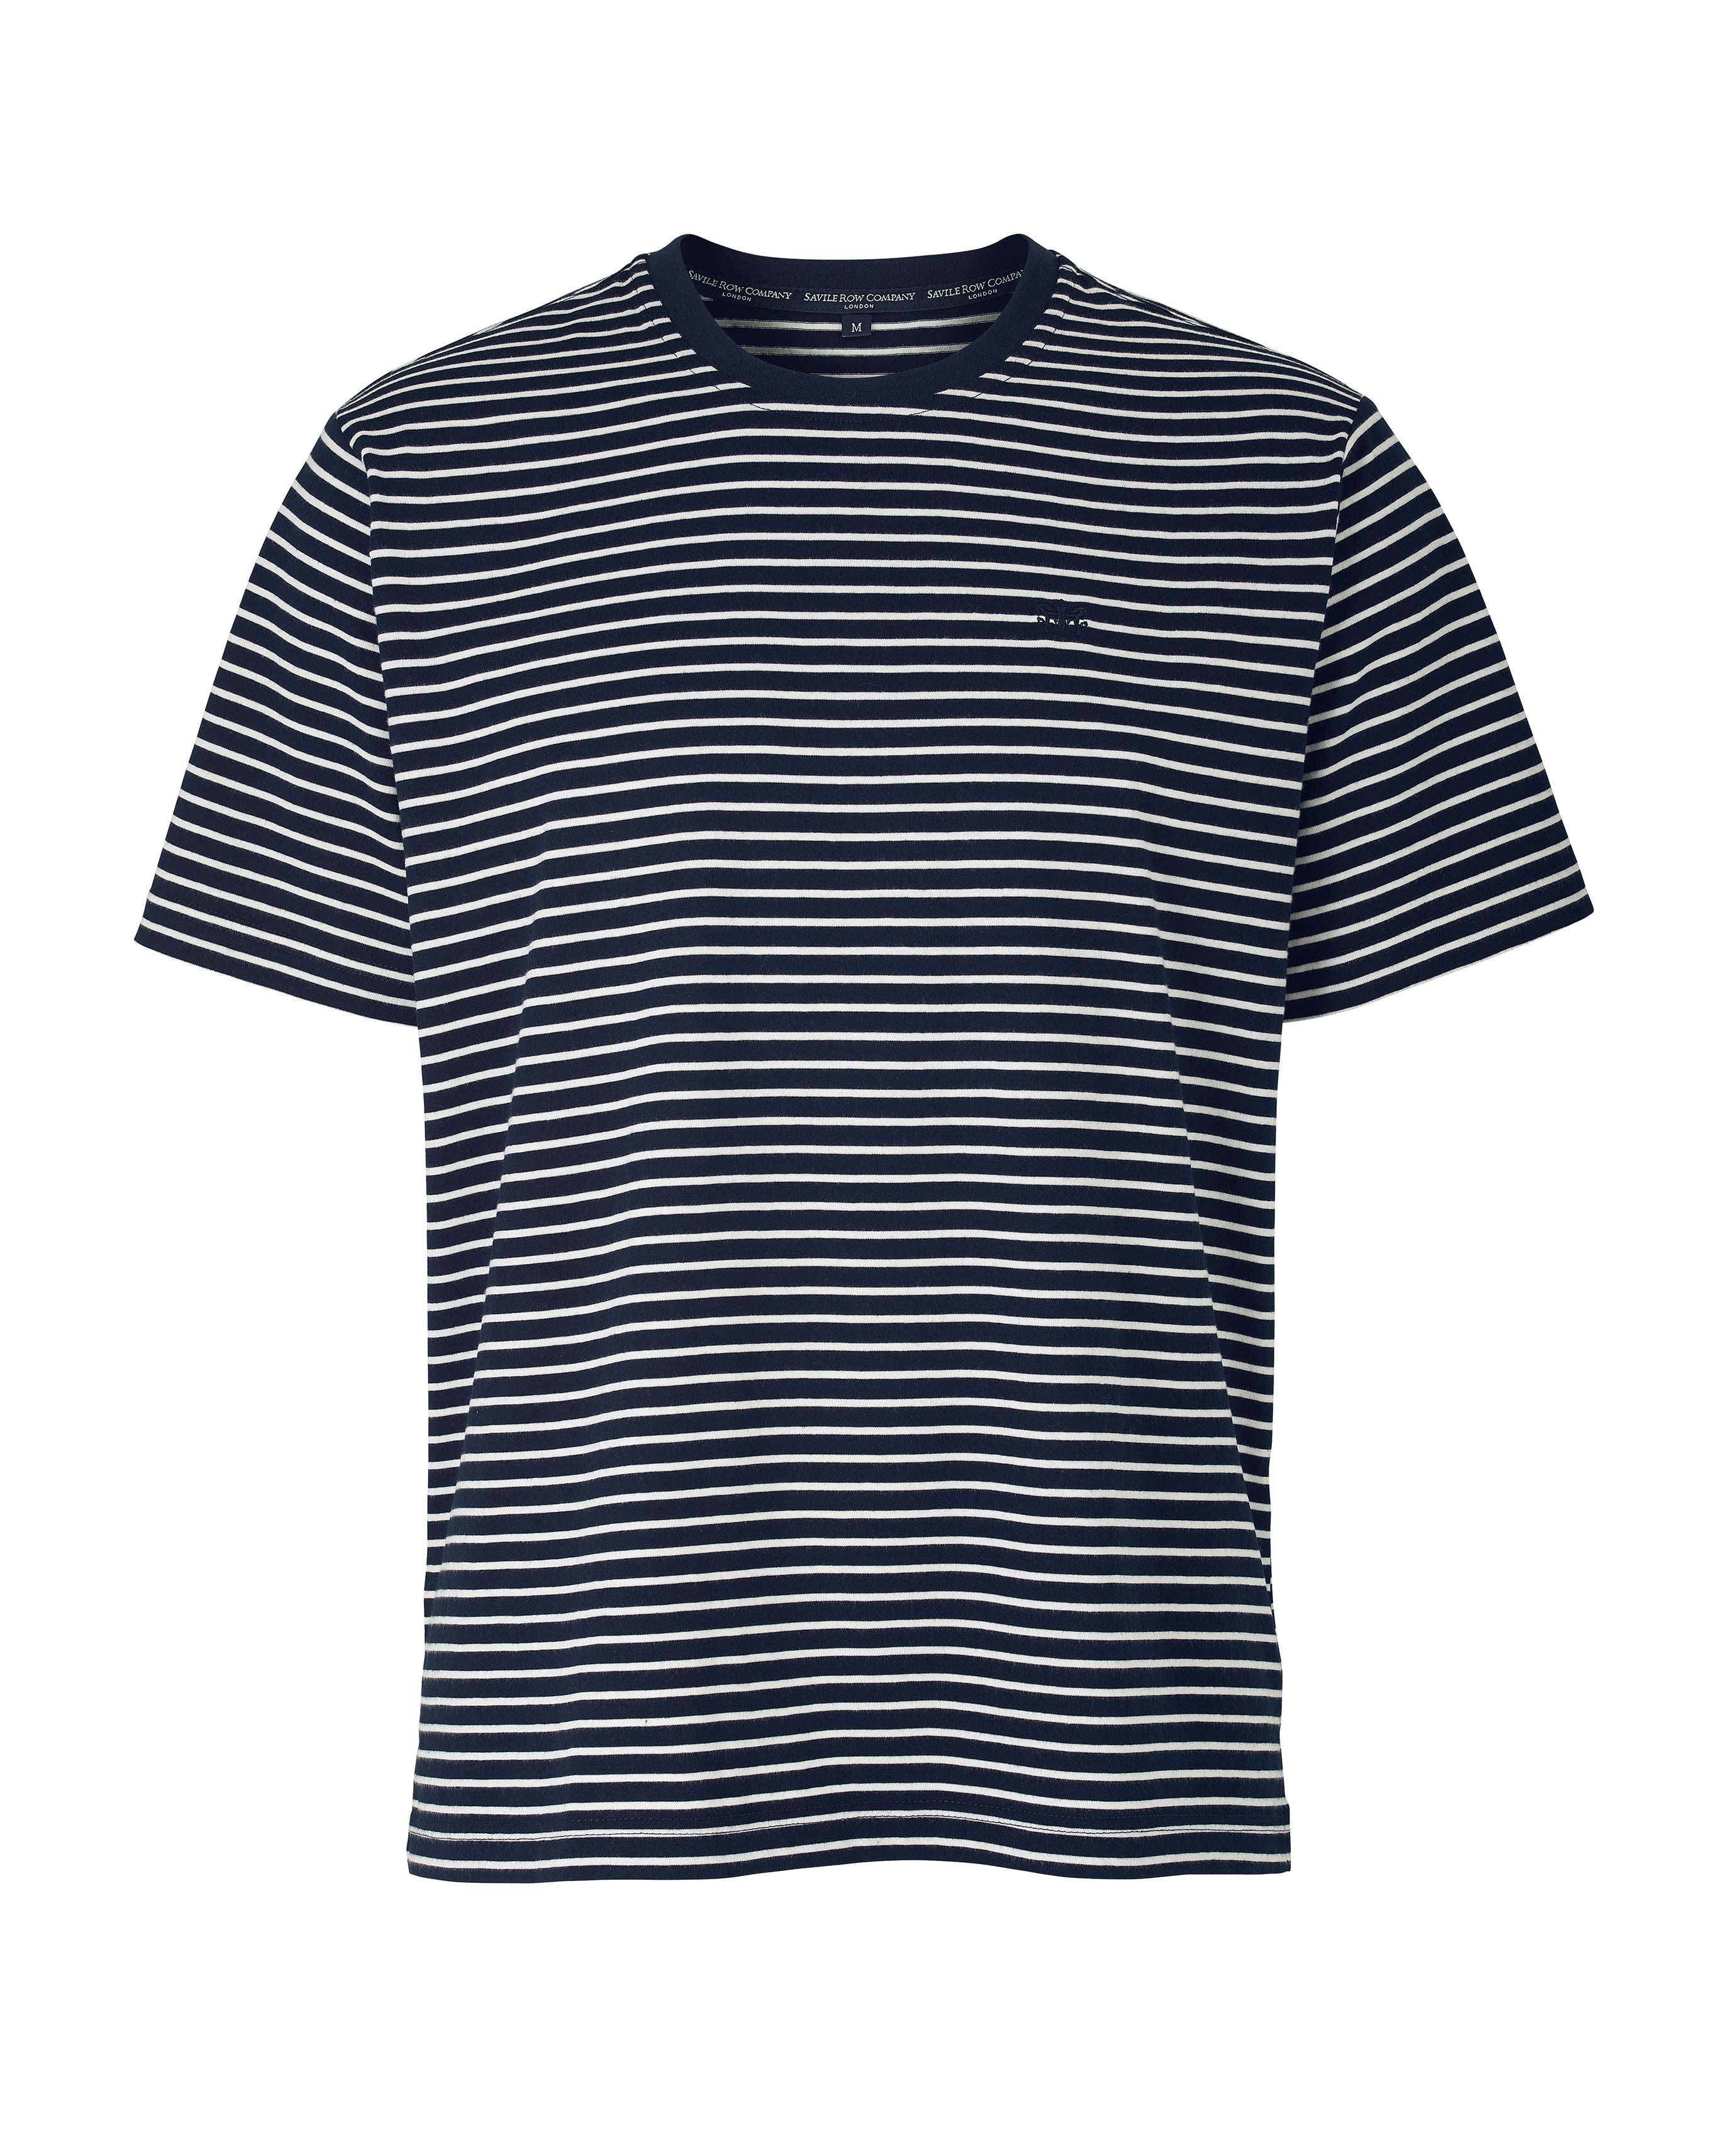 Navy & White Stripe Cotton Jersey T-Shirt | Savile Row Co